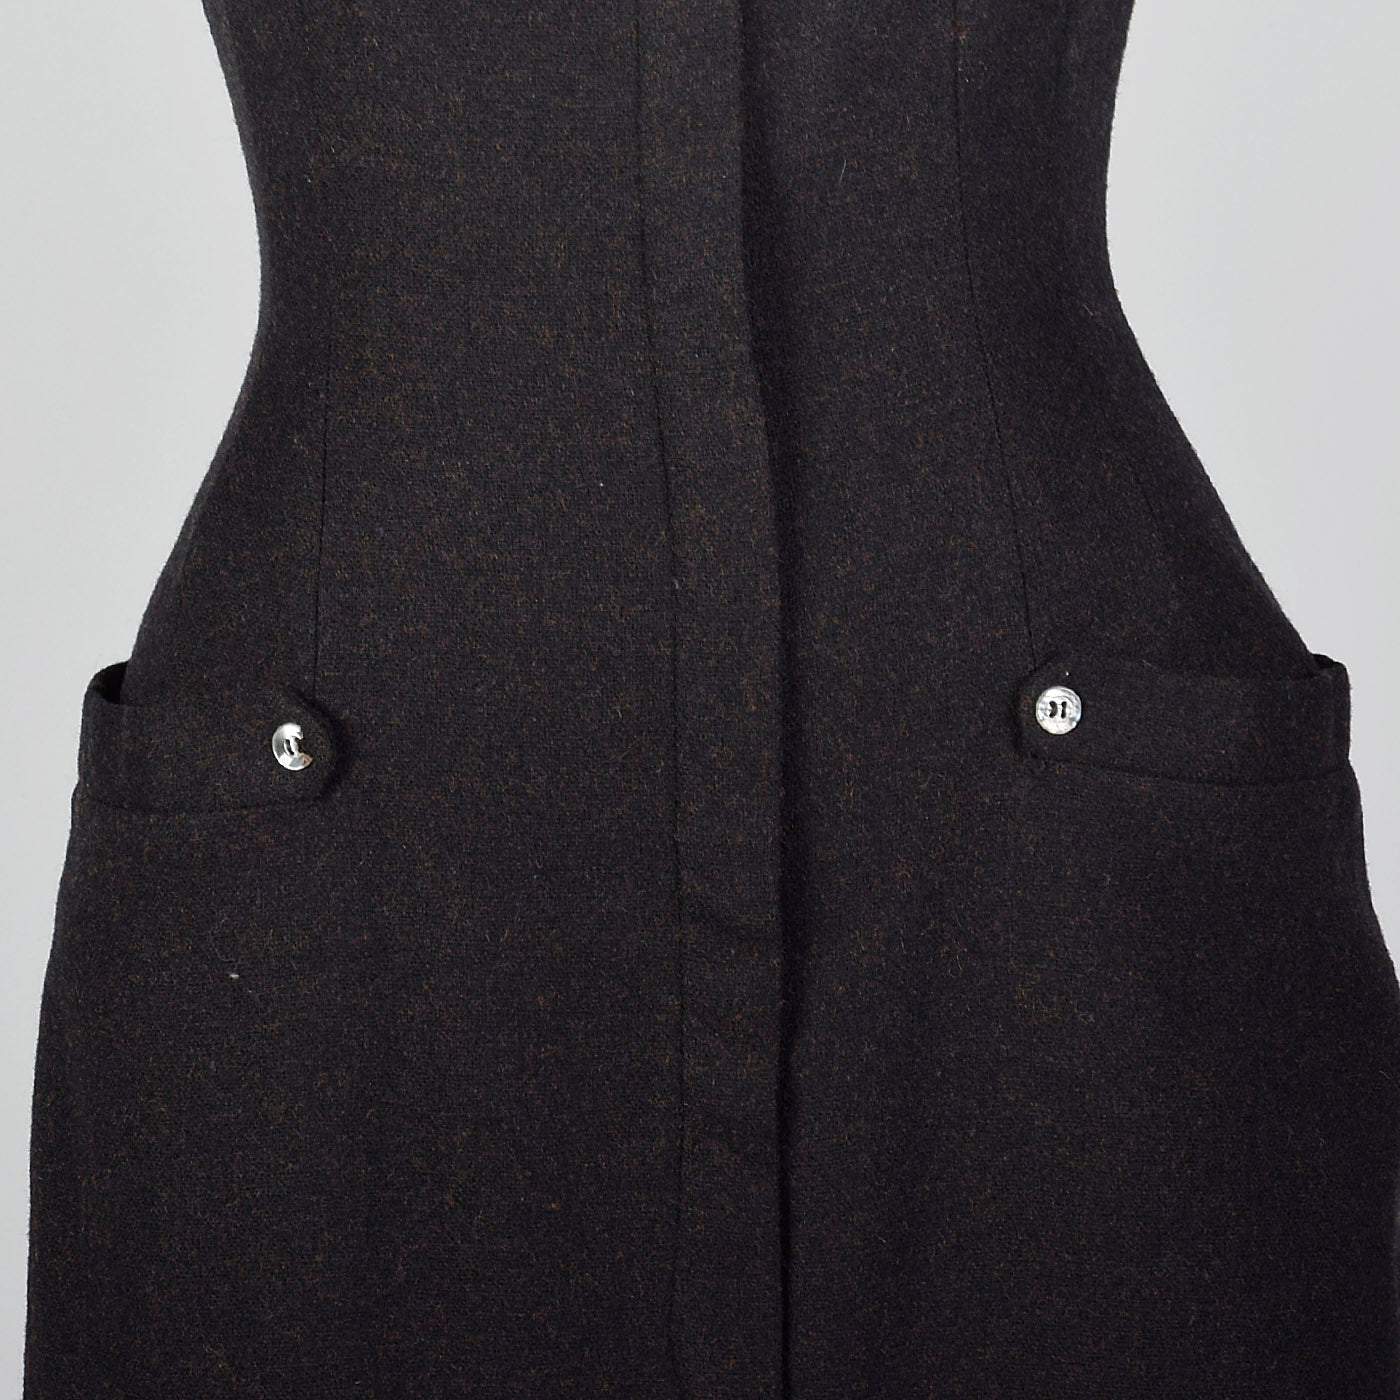 1950s Brown and Black Wool Jumper Dress